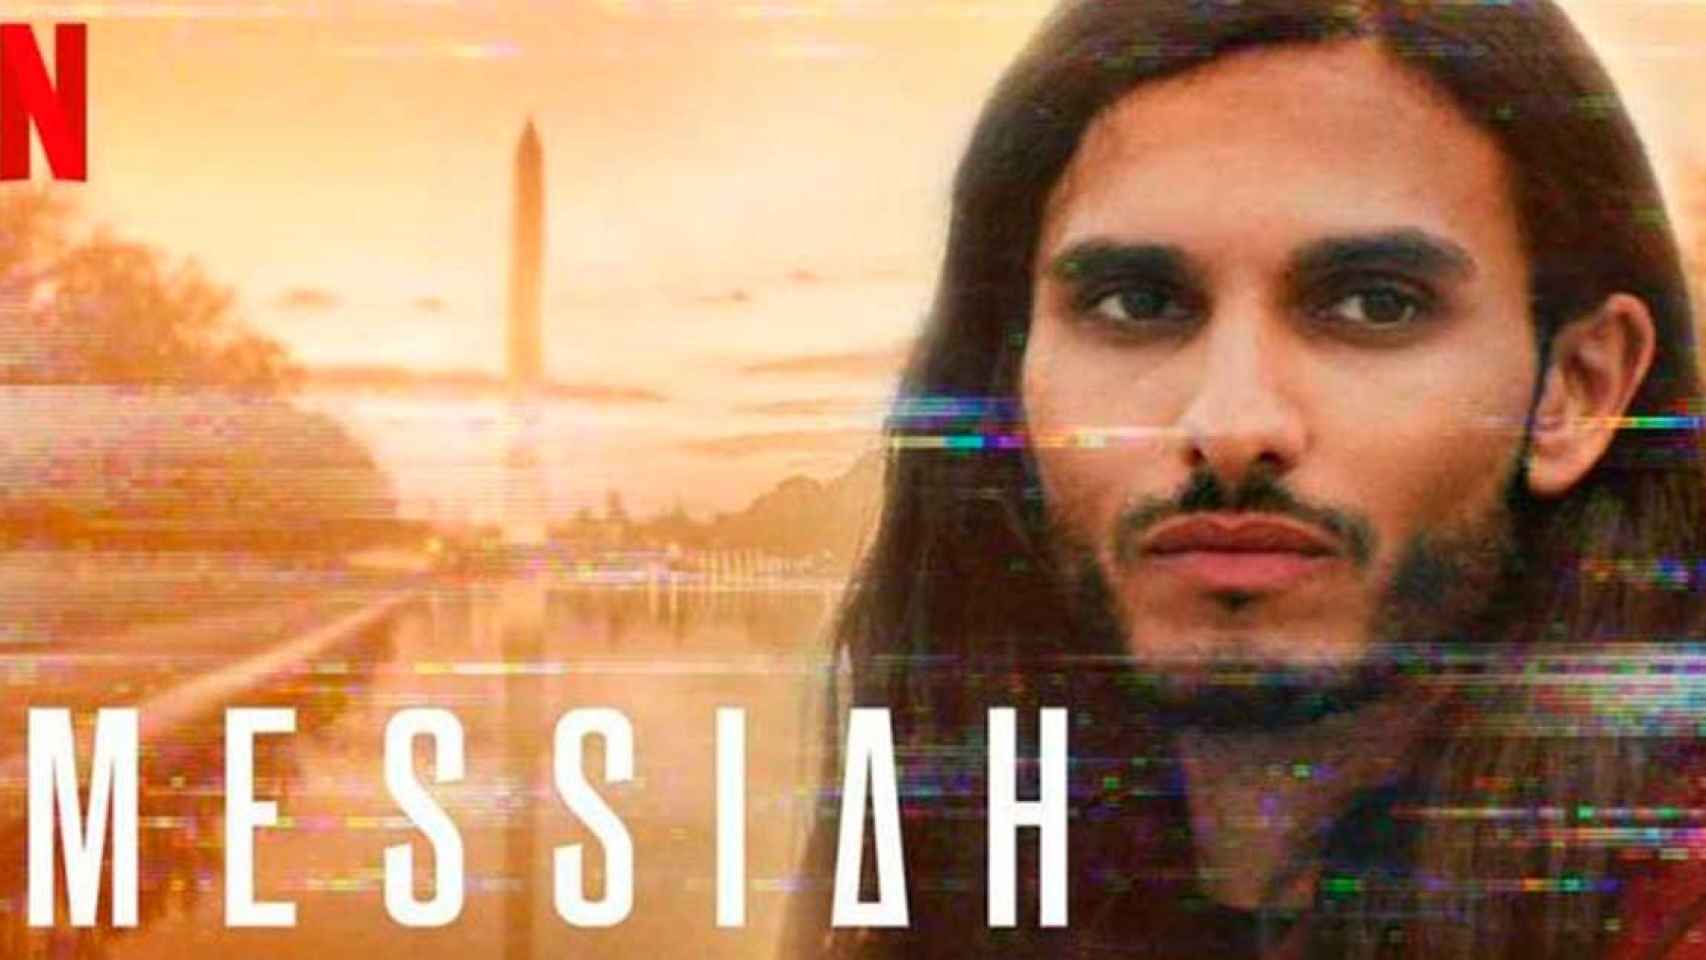 La serie 'Messiah', sobre un Mesías, se emite en Netflix